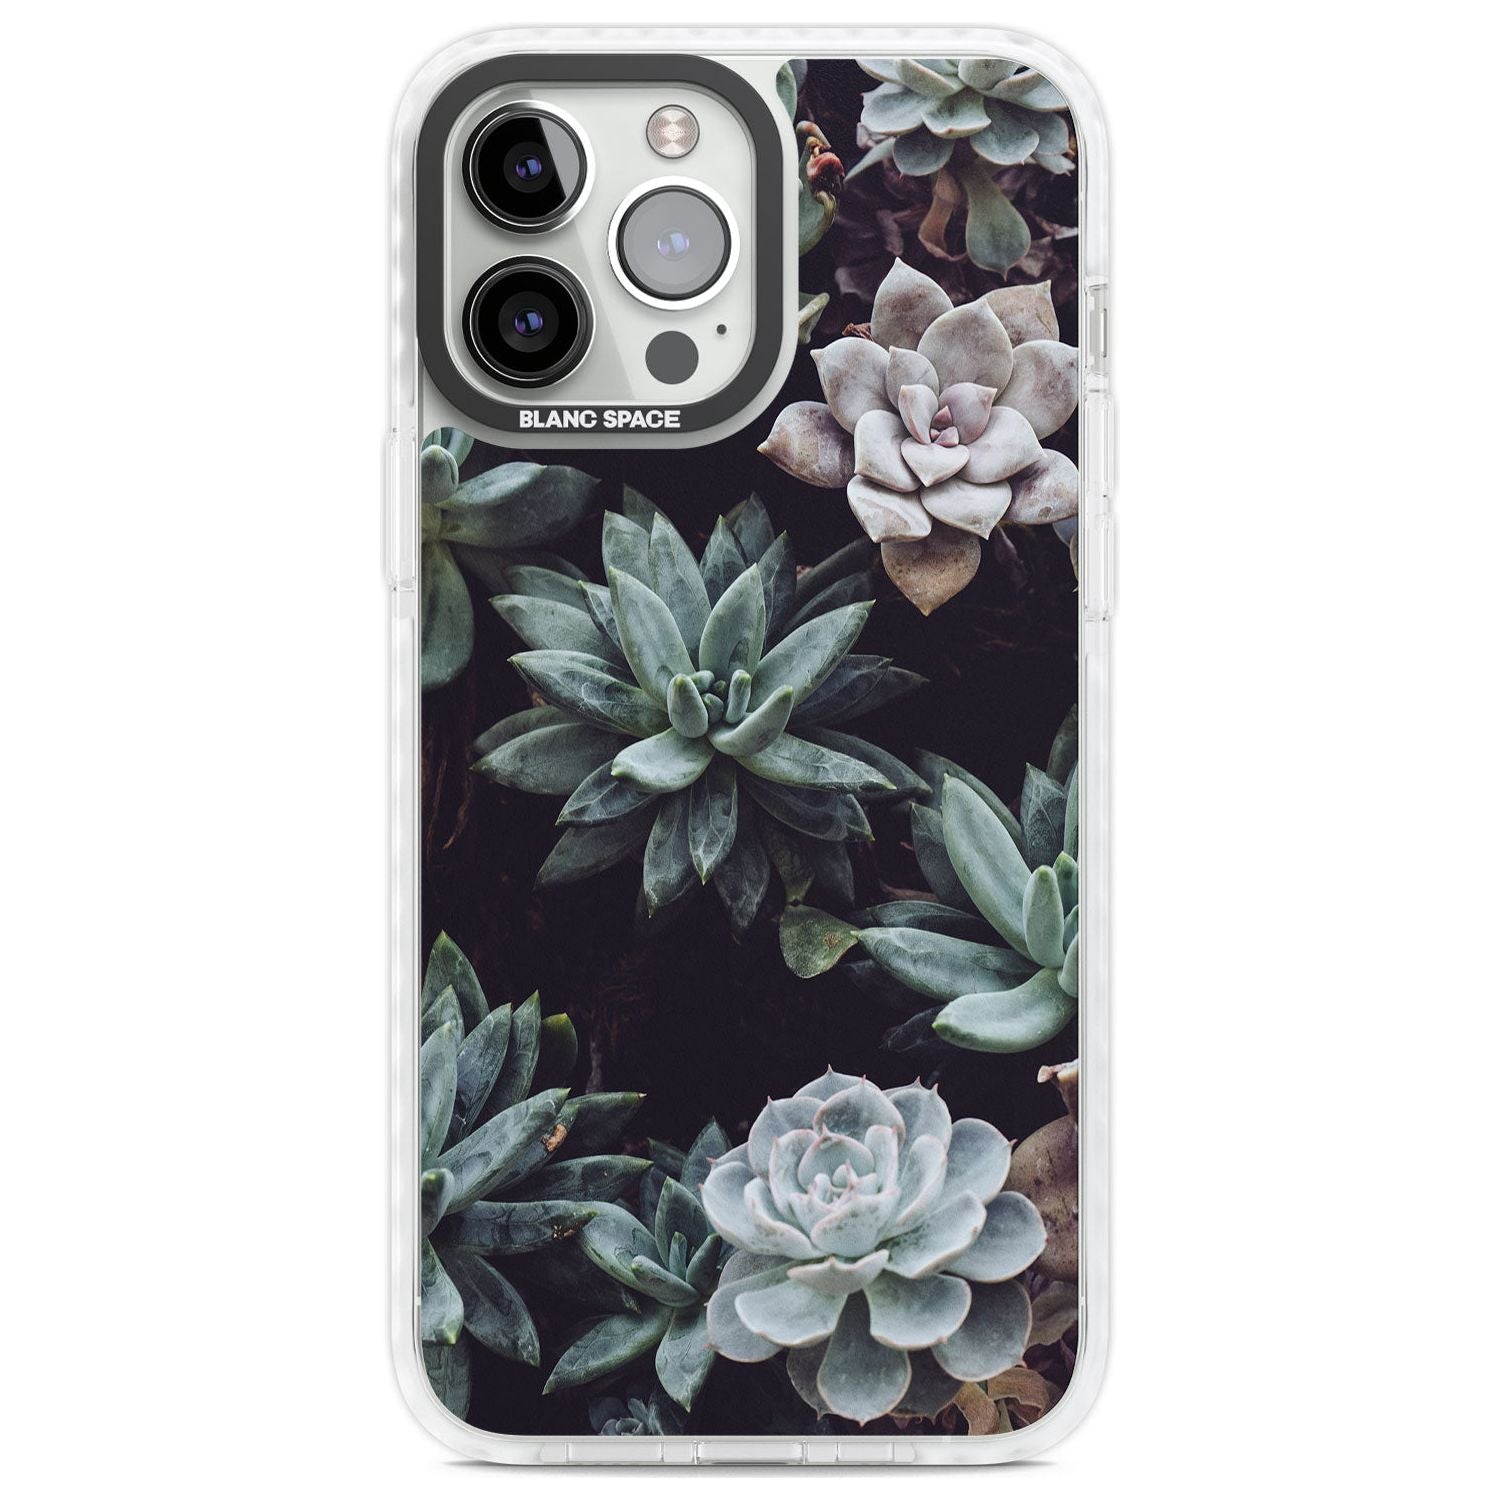 Mixed Succulents - Real Botanical Photographs Phone Case iPhone 13 Pro Max / Impact Case,iPhone 14 Pro Max / Impact Case Blanc Space